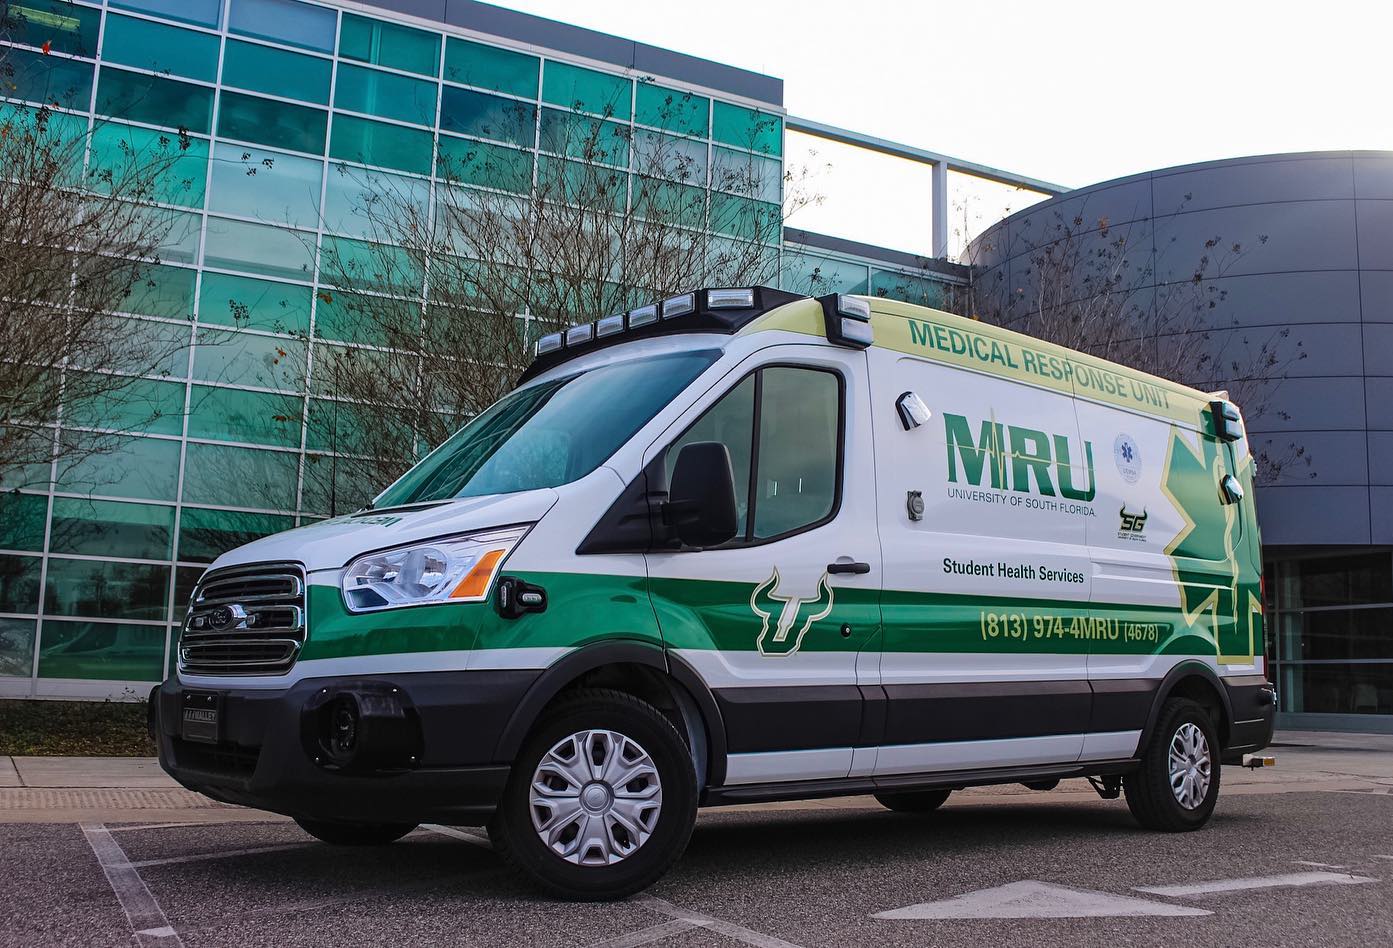 Campus Medical Response Unit to make its debut